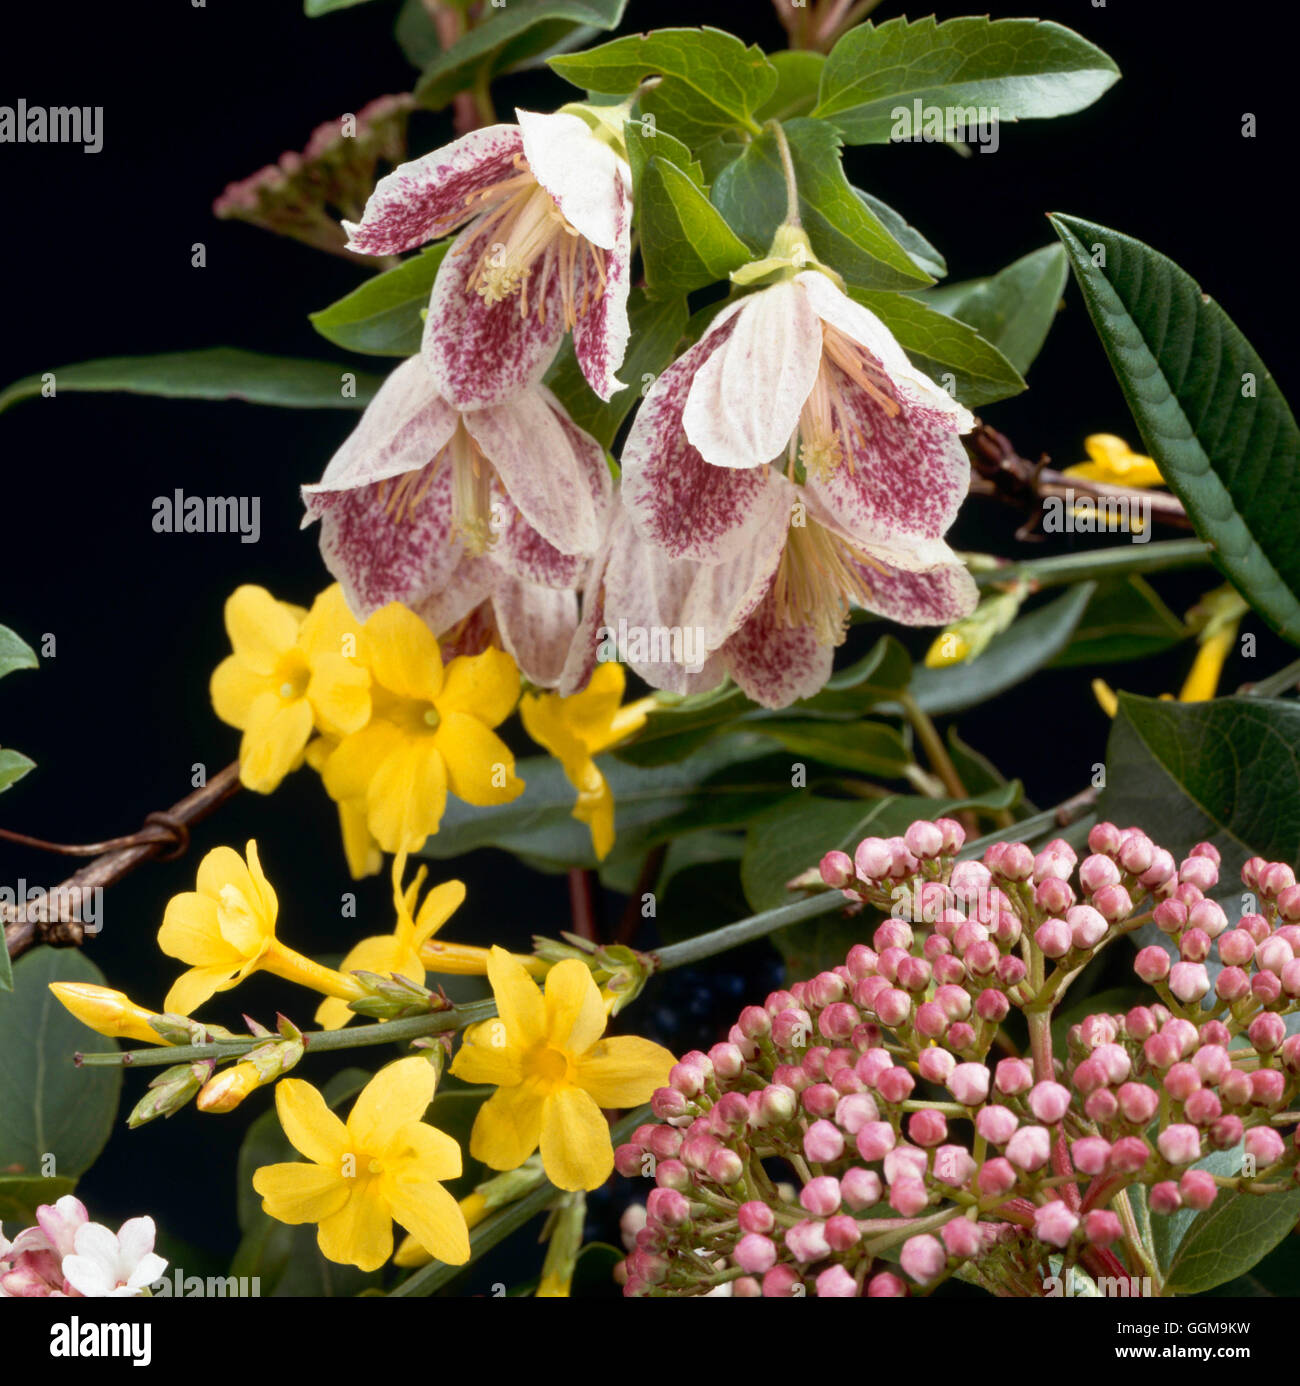 Winter Flowers - Clematis cirrhosa `Freckles' with Jasminum nudiflorum and Viburnum tinus `Eve Price'   WIN073225  Com Stock Photo